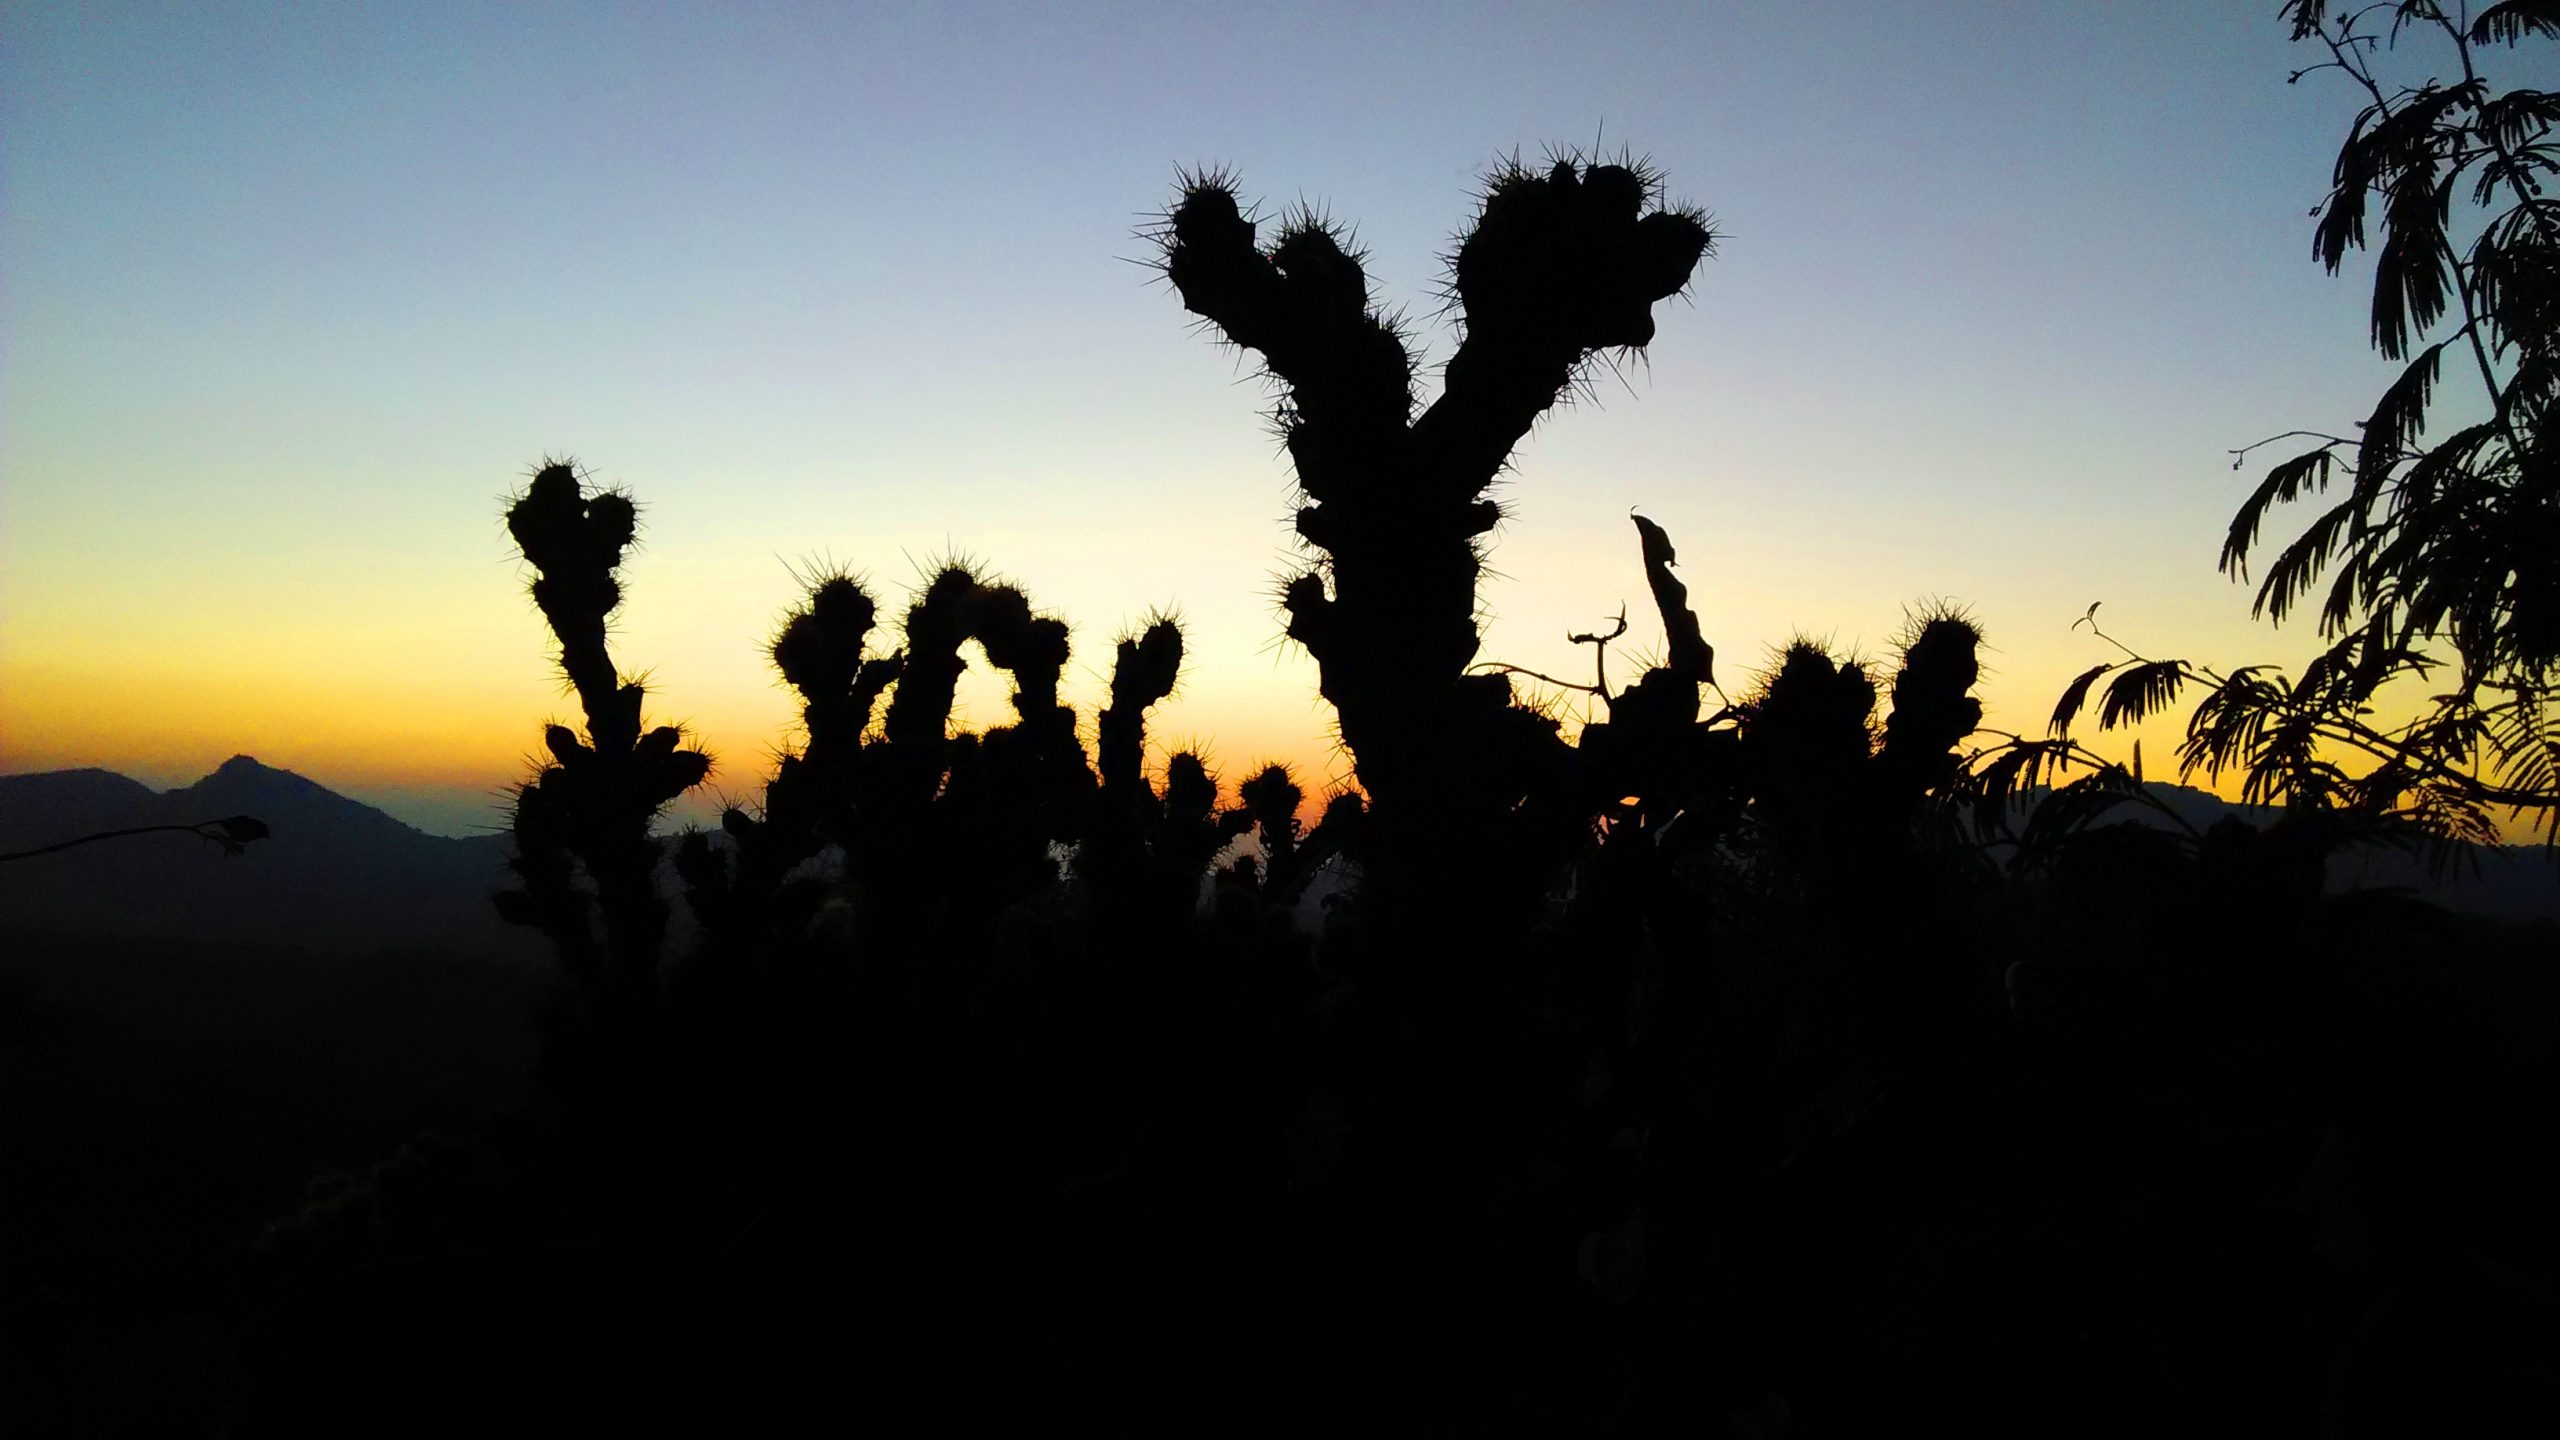 Cactus tree during sunset